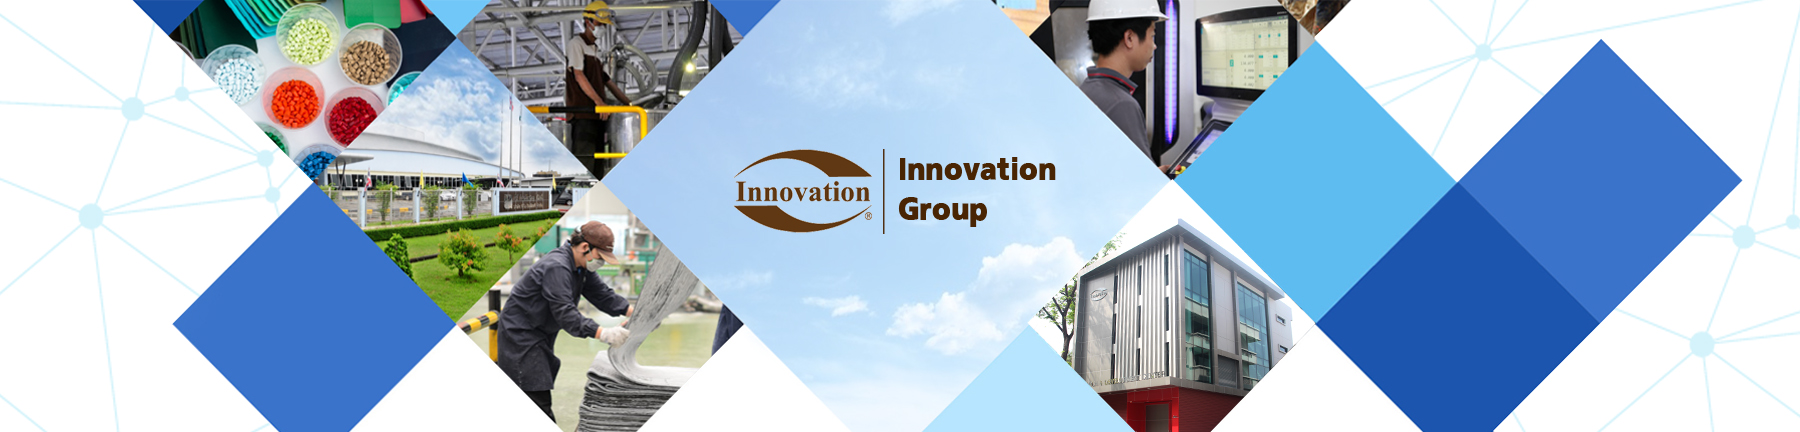 Innovation-slide